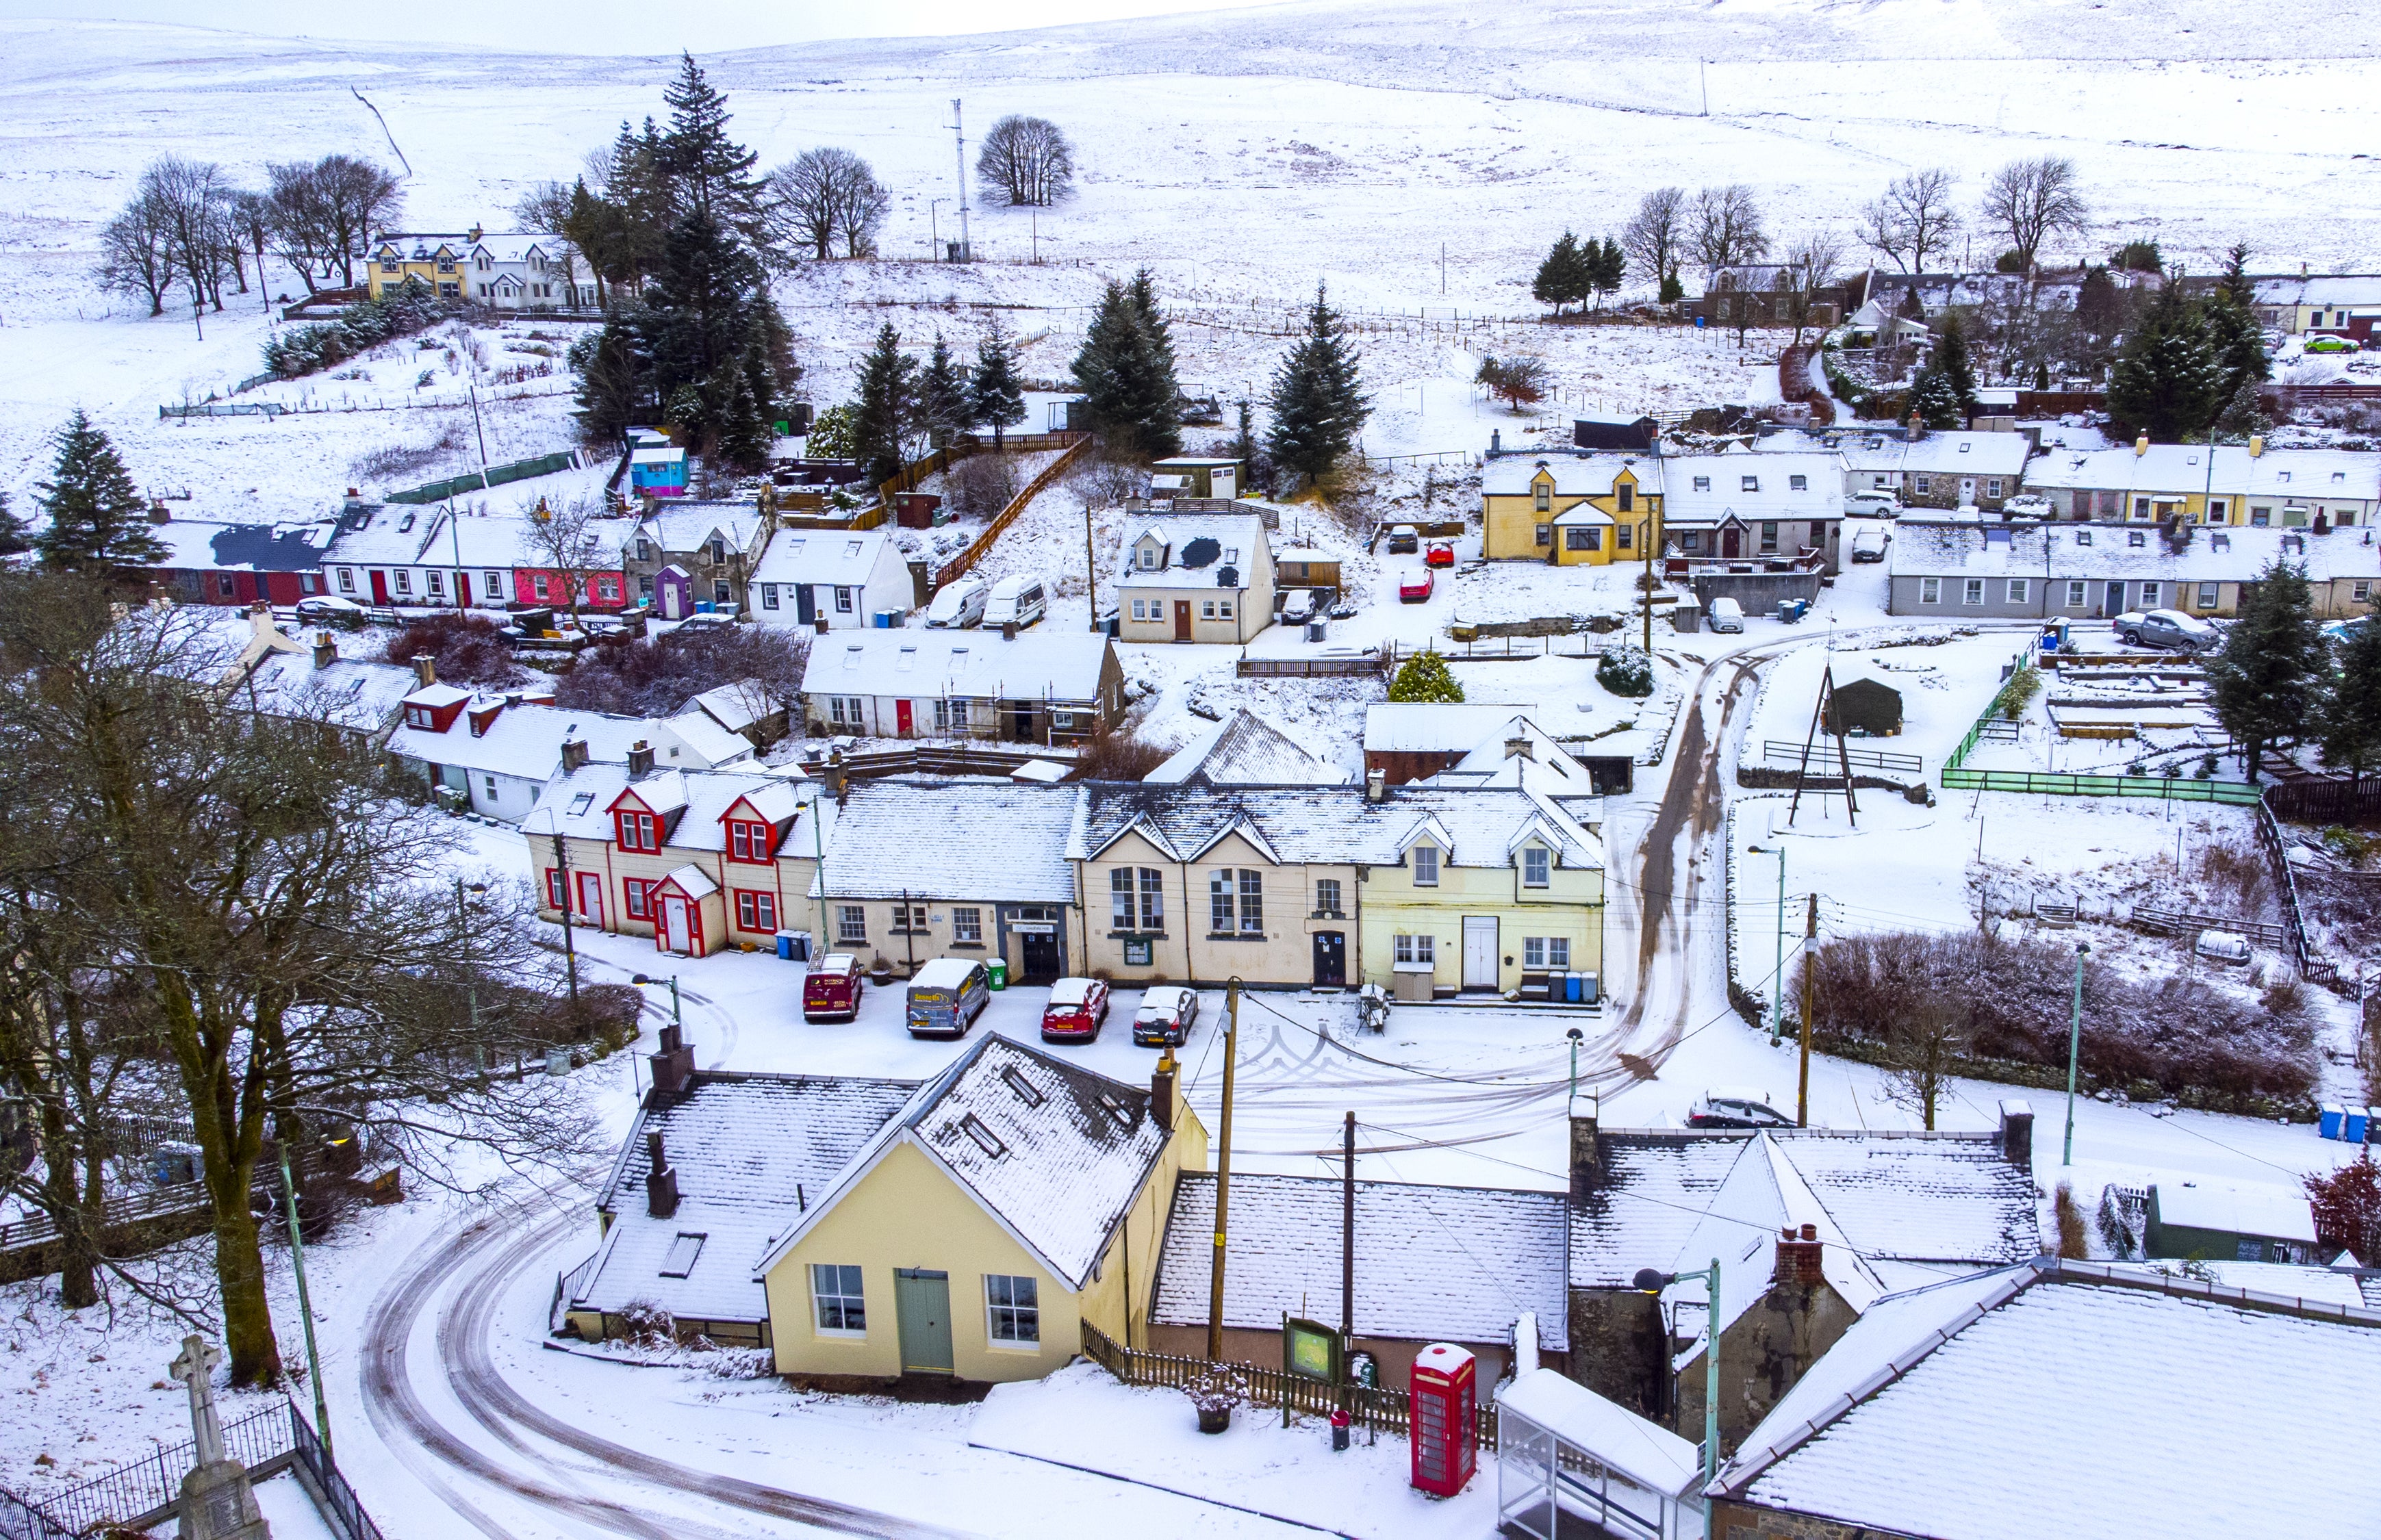 Snow in Leadhills village in South Lanarkshire.